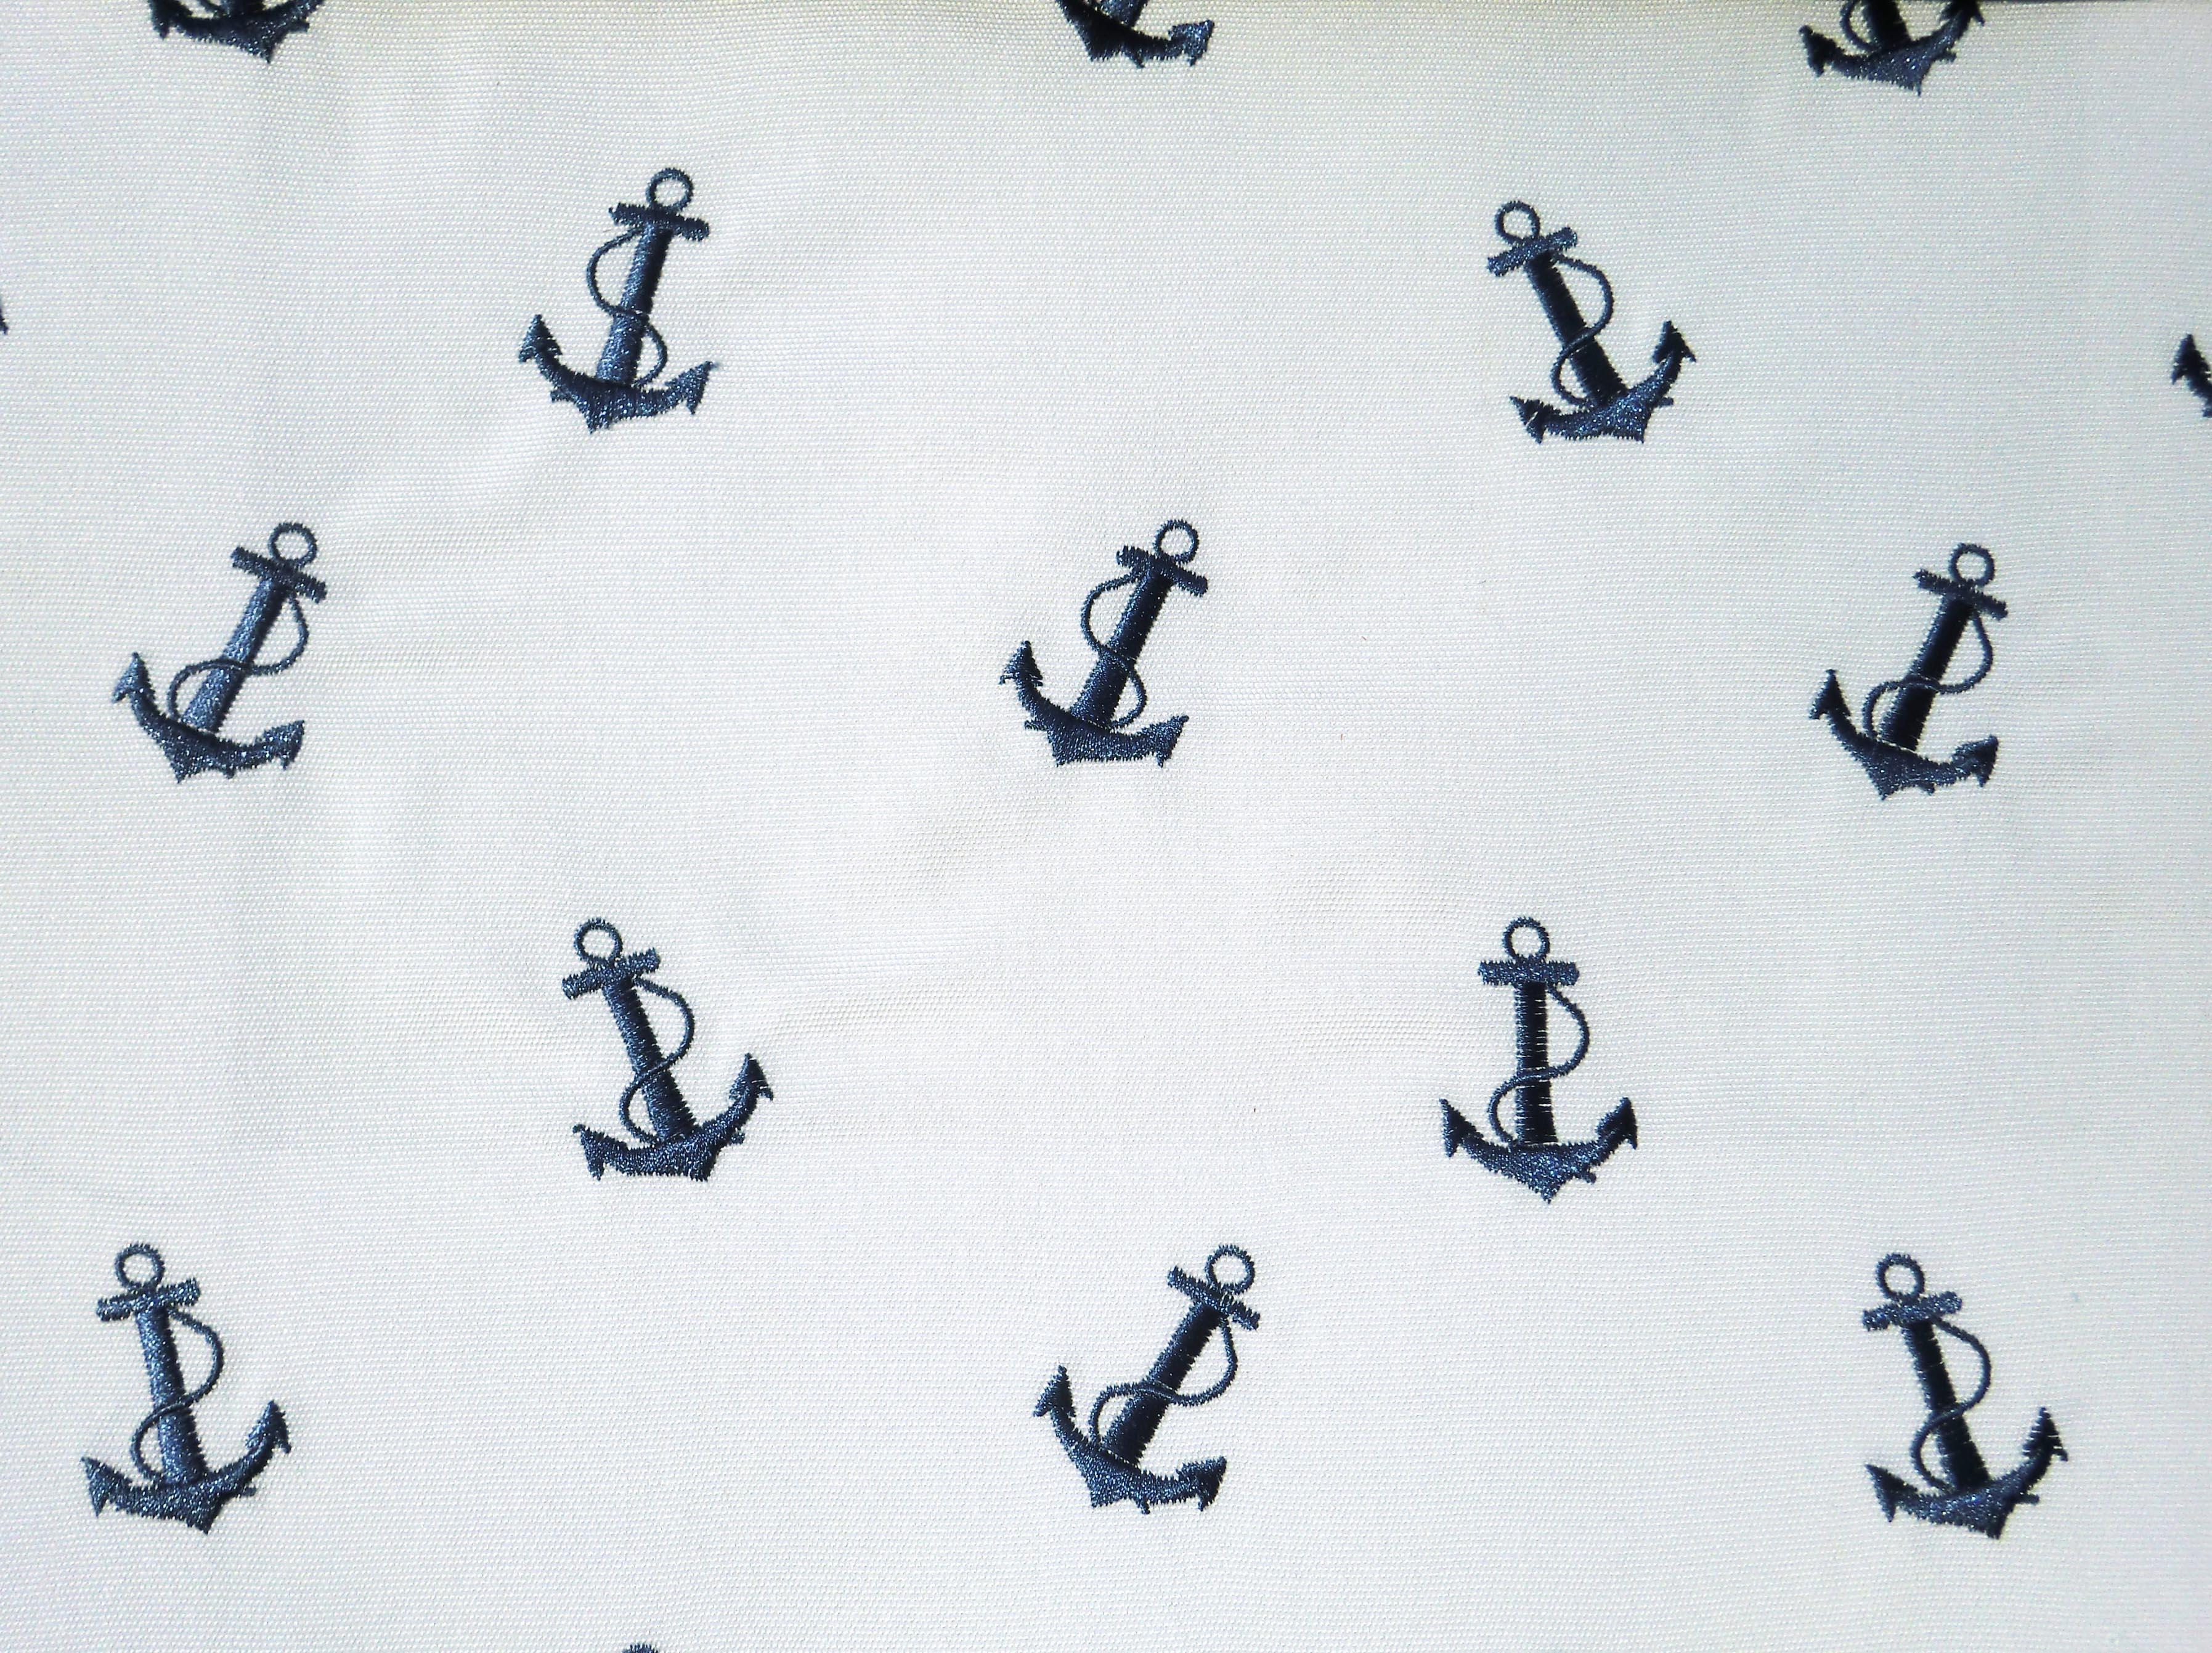 Ralph Lauren Upper Deck Embroidery Sailcloth Boats And Sailing